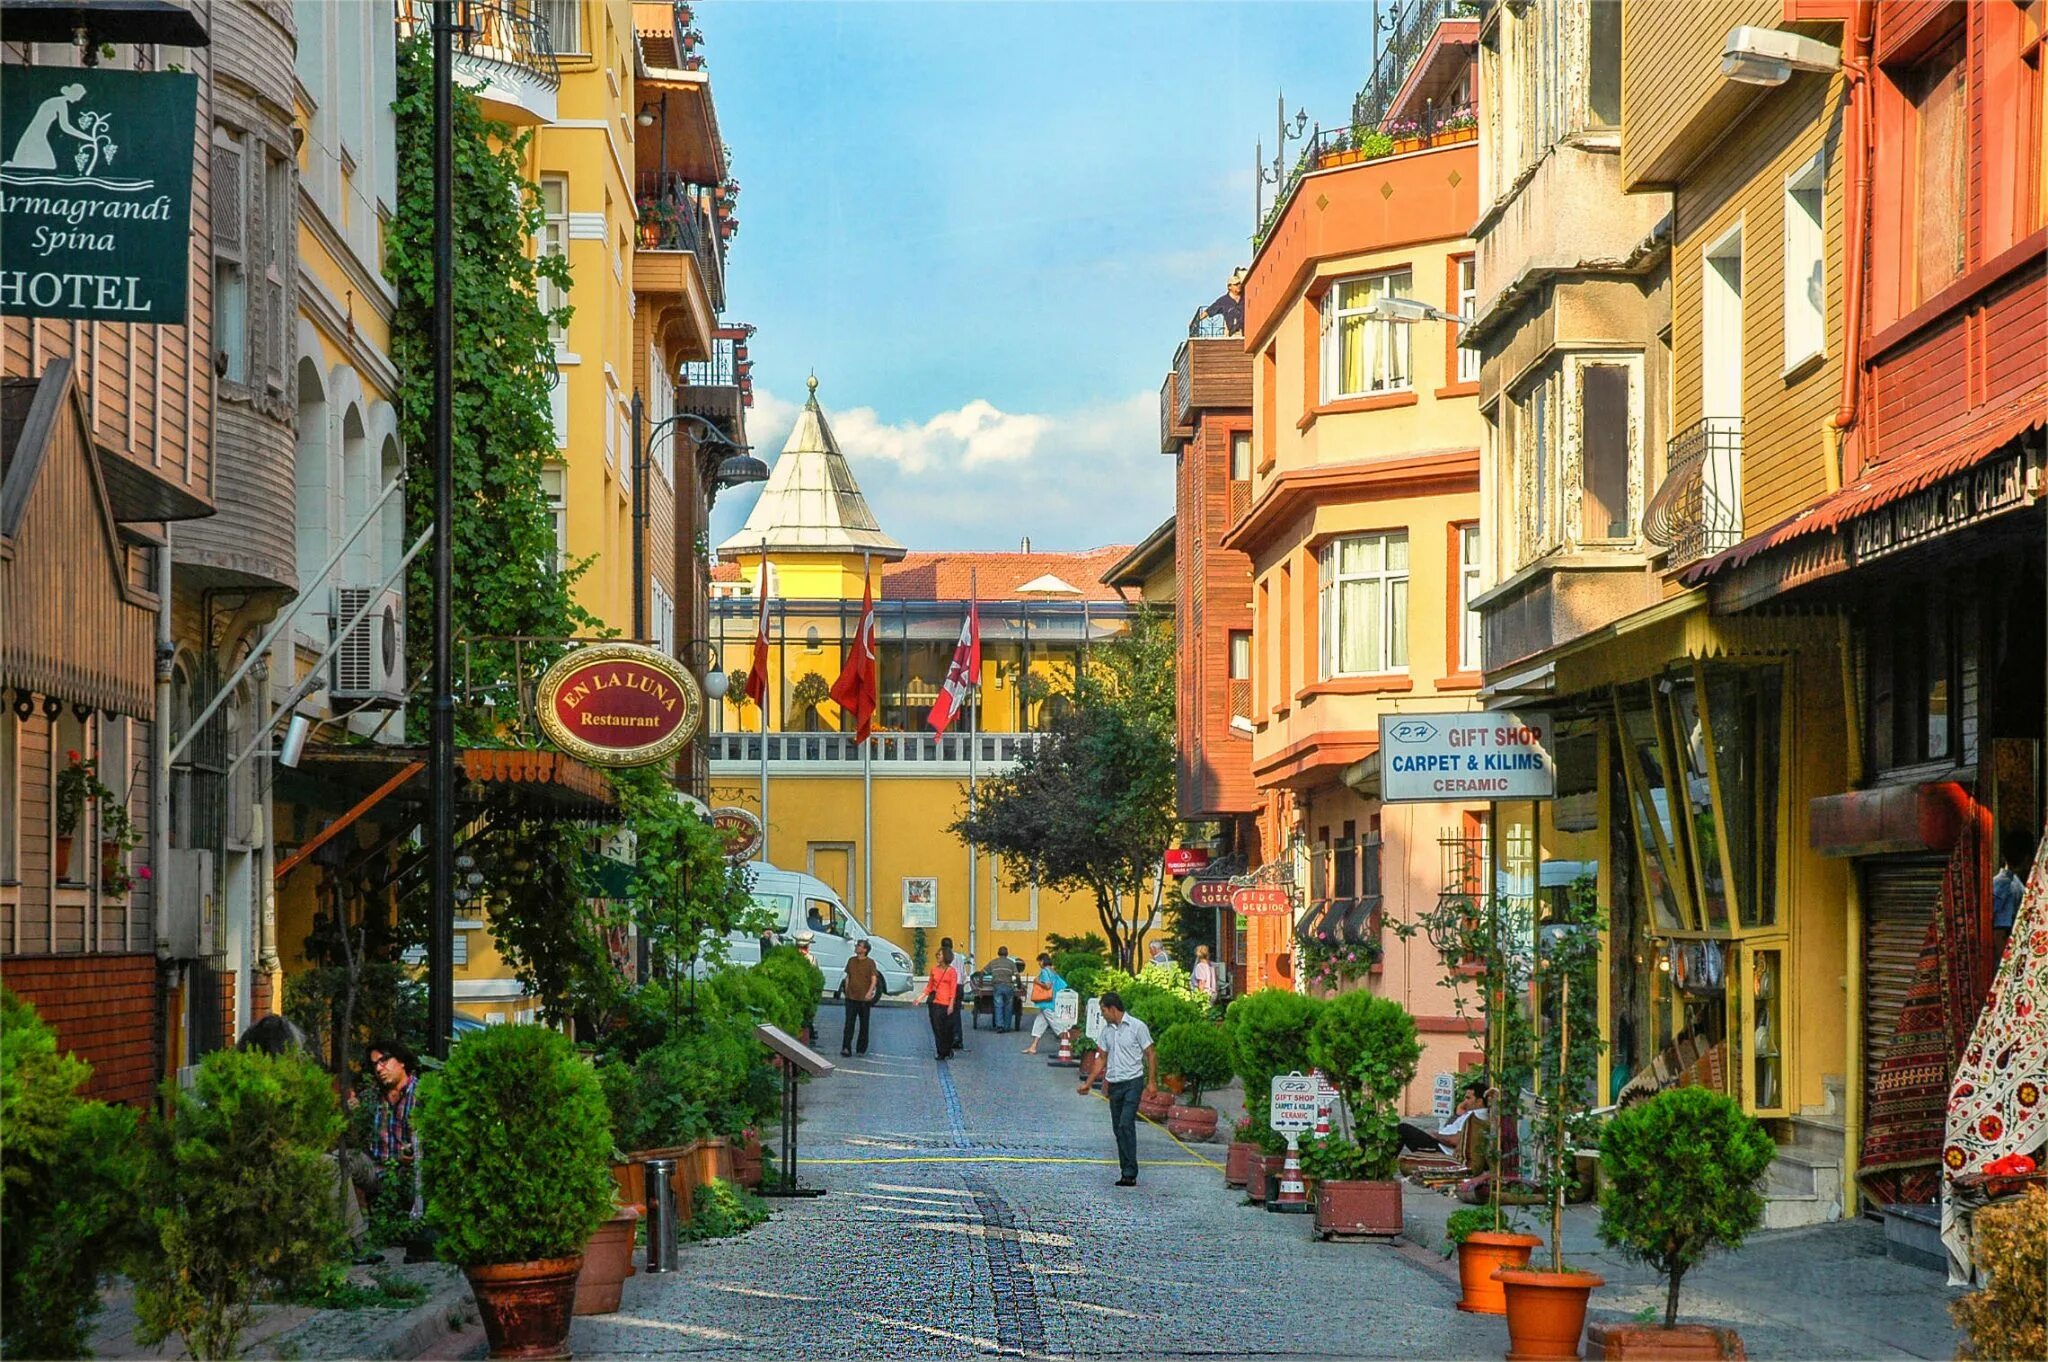 Стамбул старый город султанахмет. Улочки Стамбула старый город. Стамбул Султанахмет улицы. Турецкие улочки Стамбула.